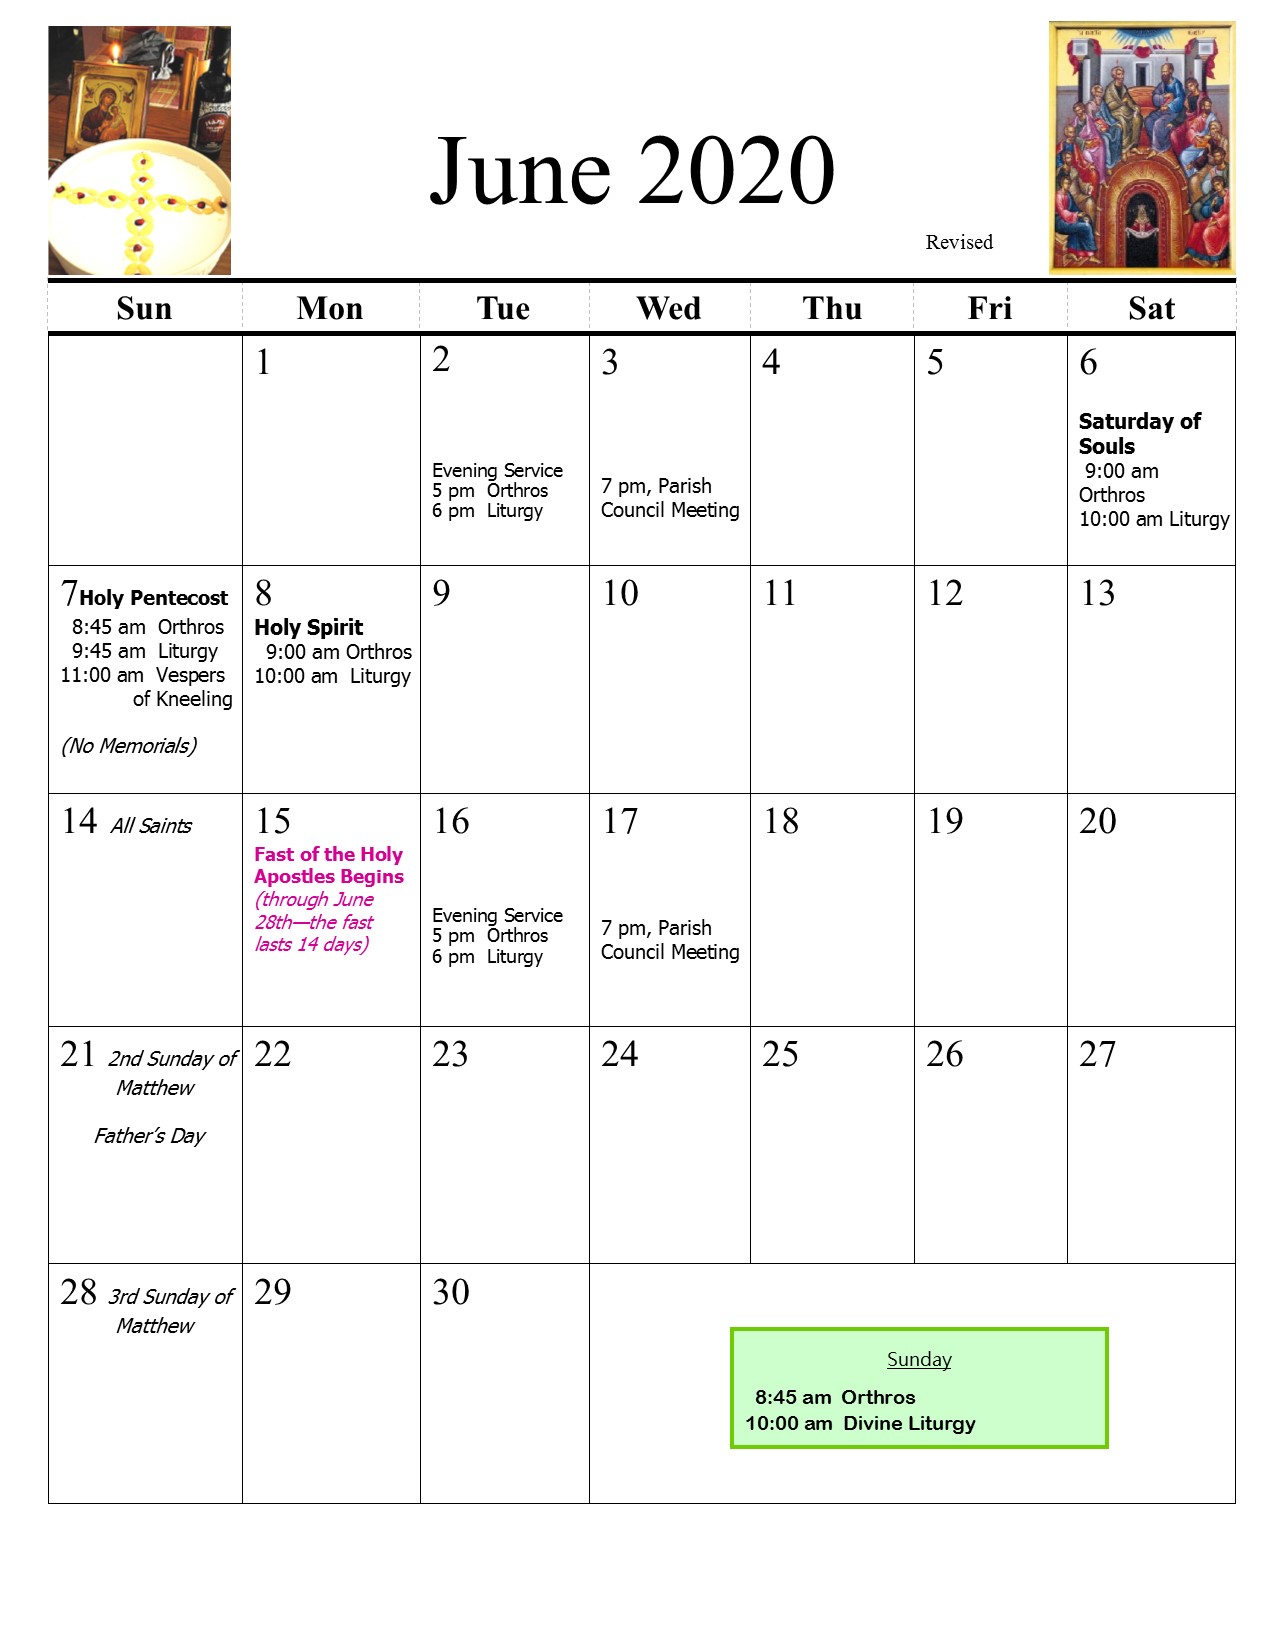 June 2020 Calendar rev